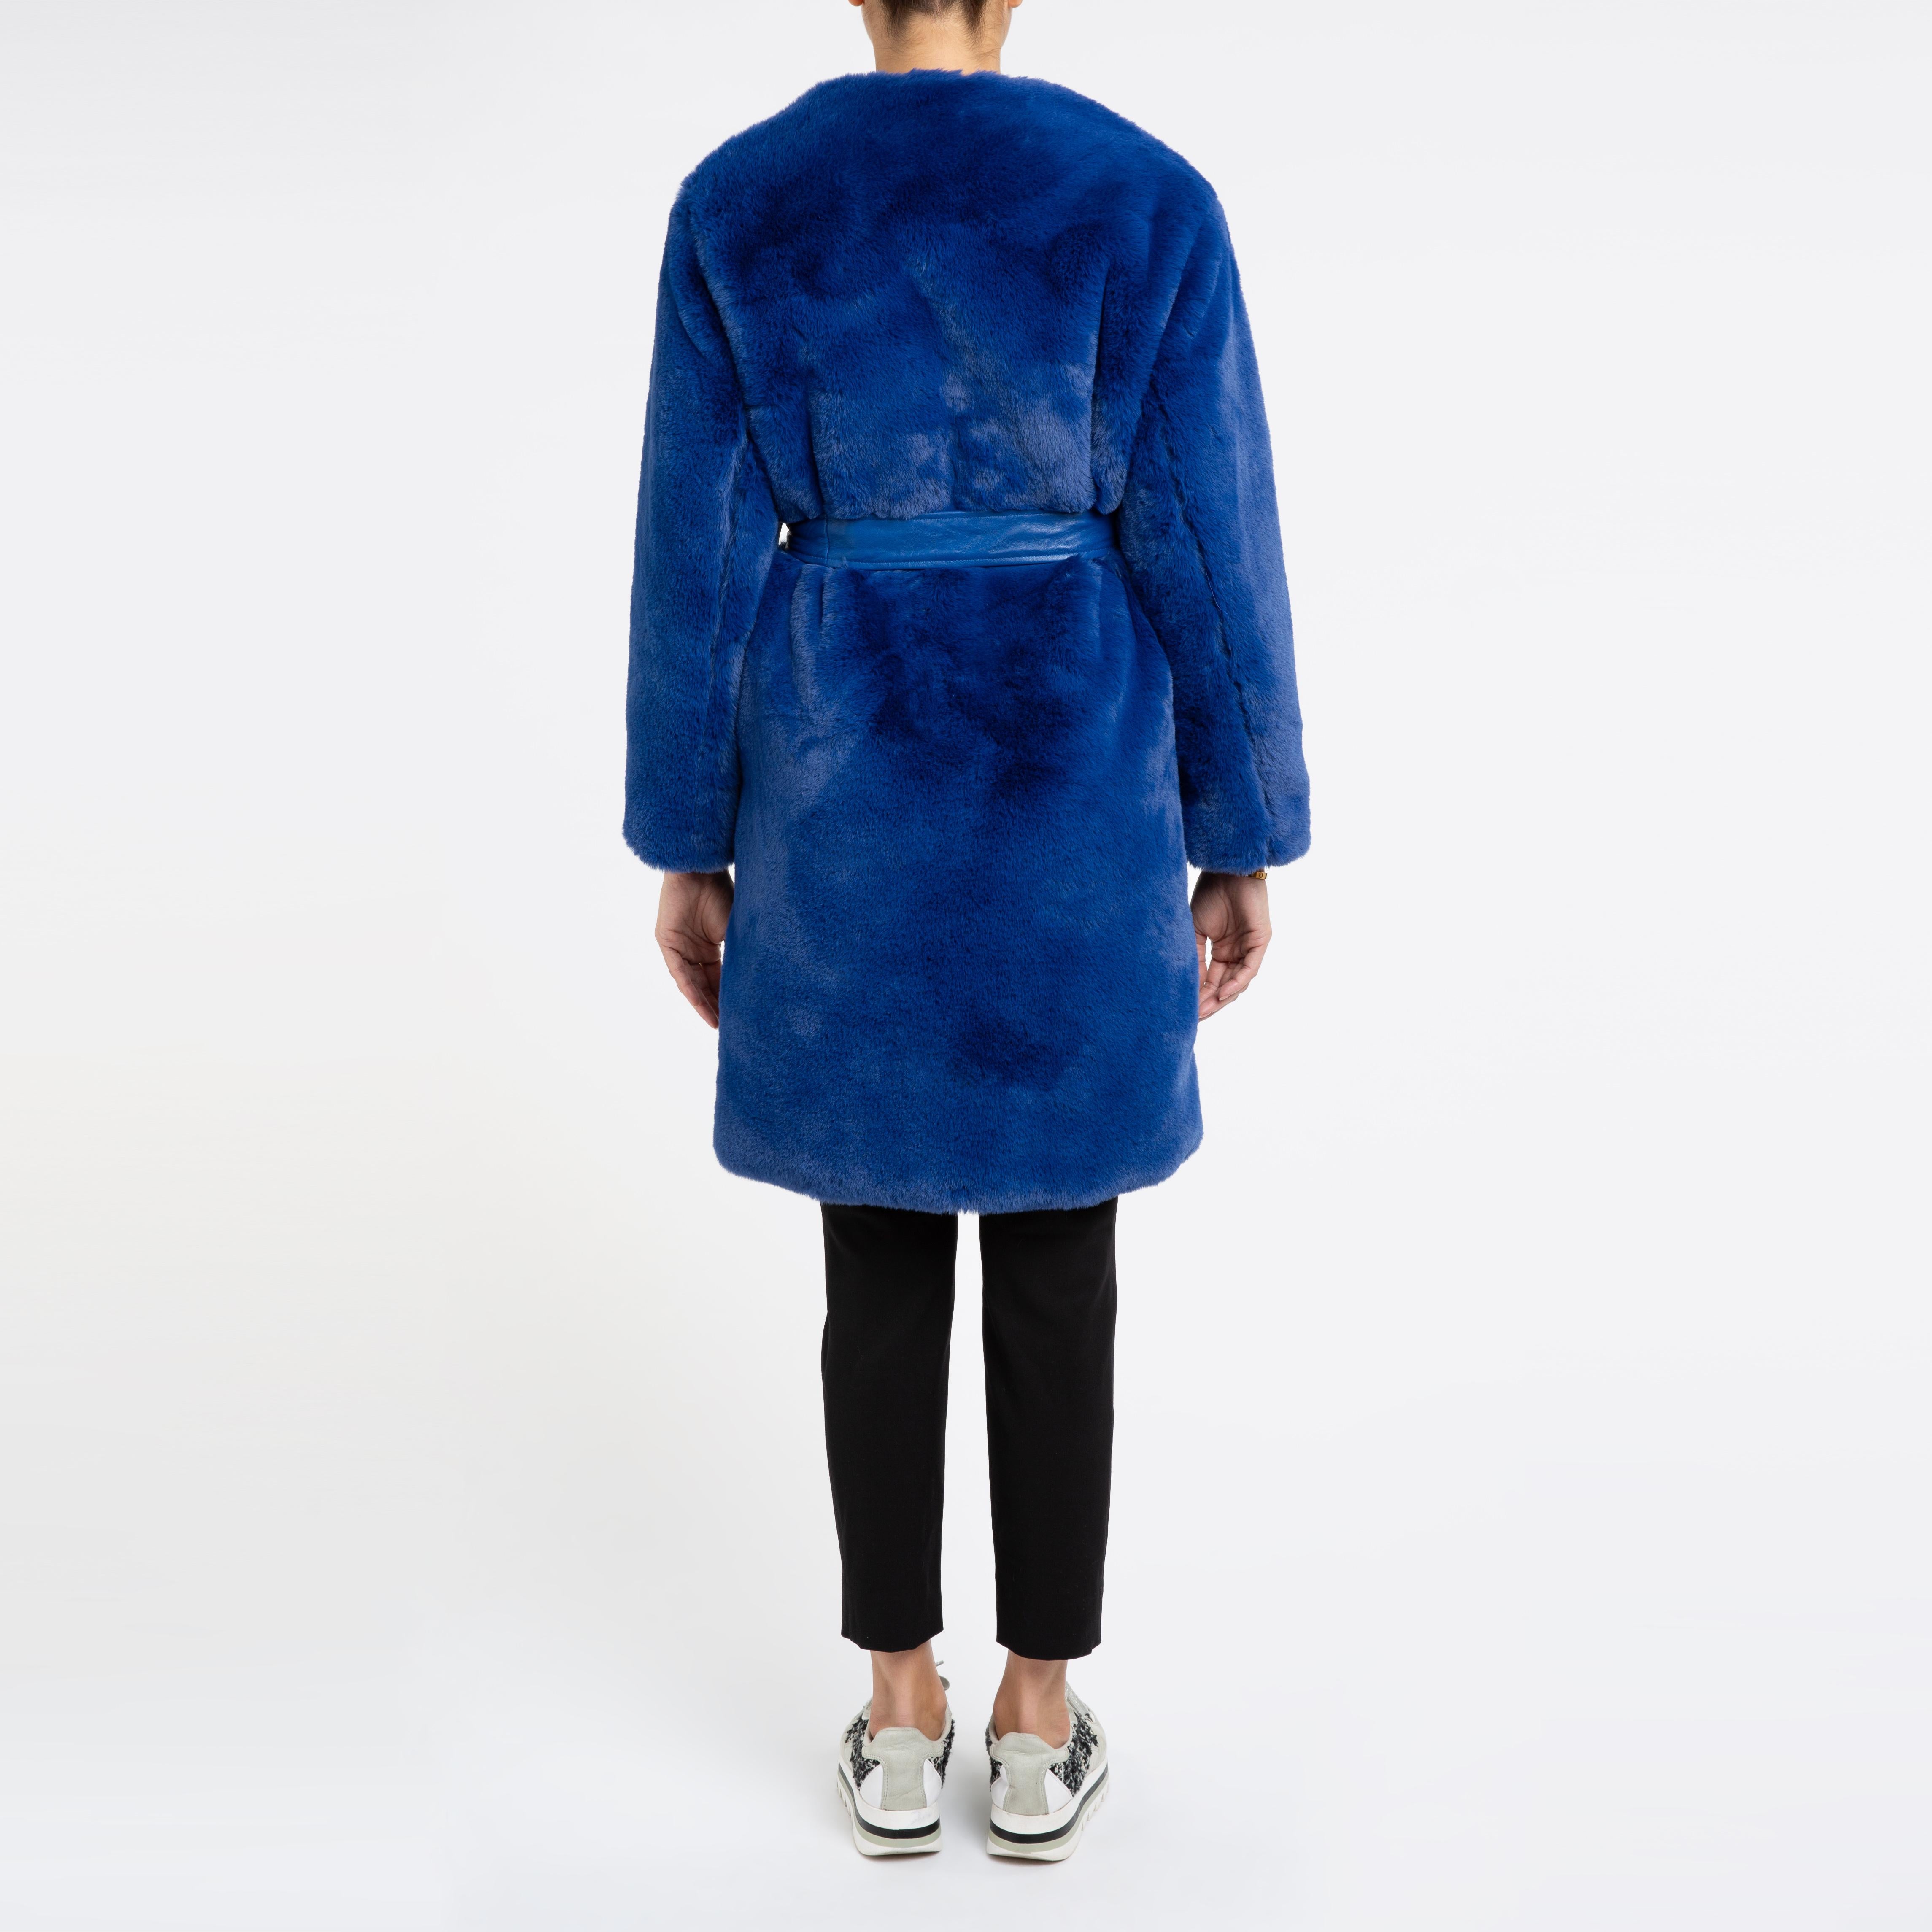 Verheyen London Serena  Collarless Faux Fur Coat in Blue - Size uk 6  For Sale 4